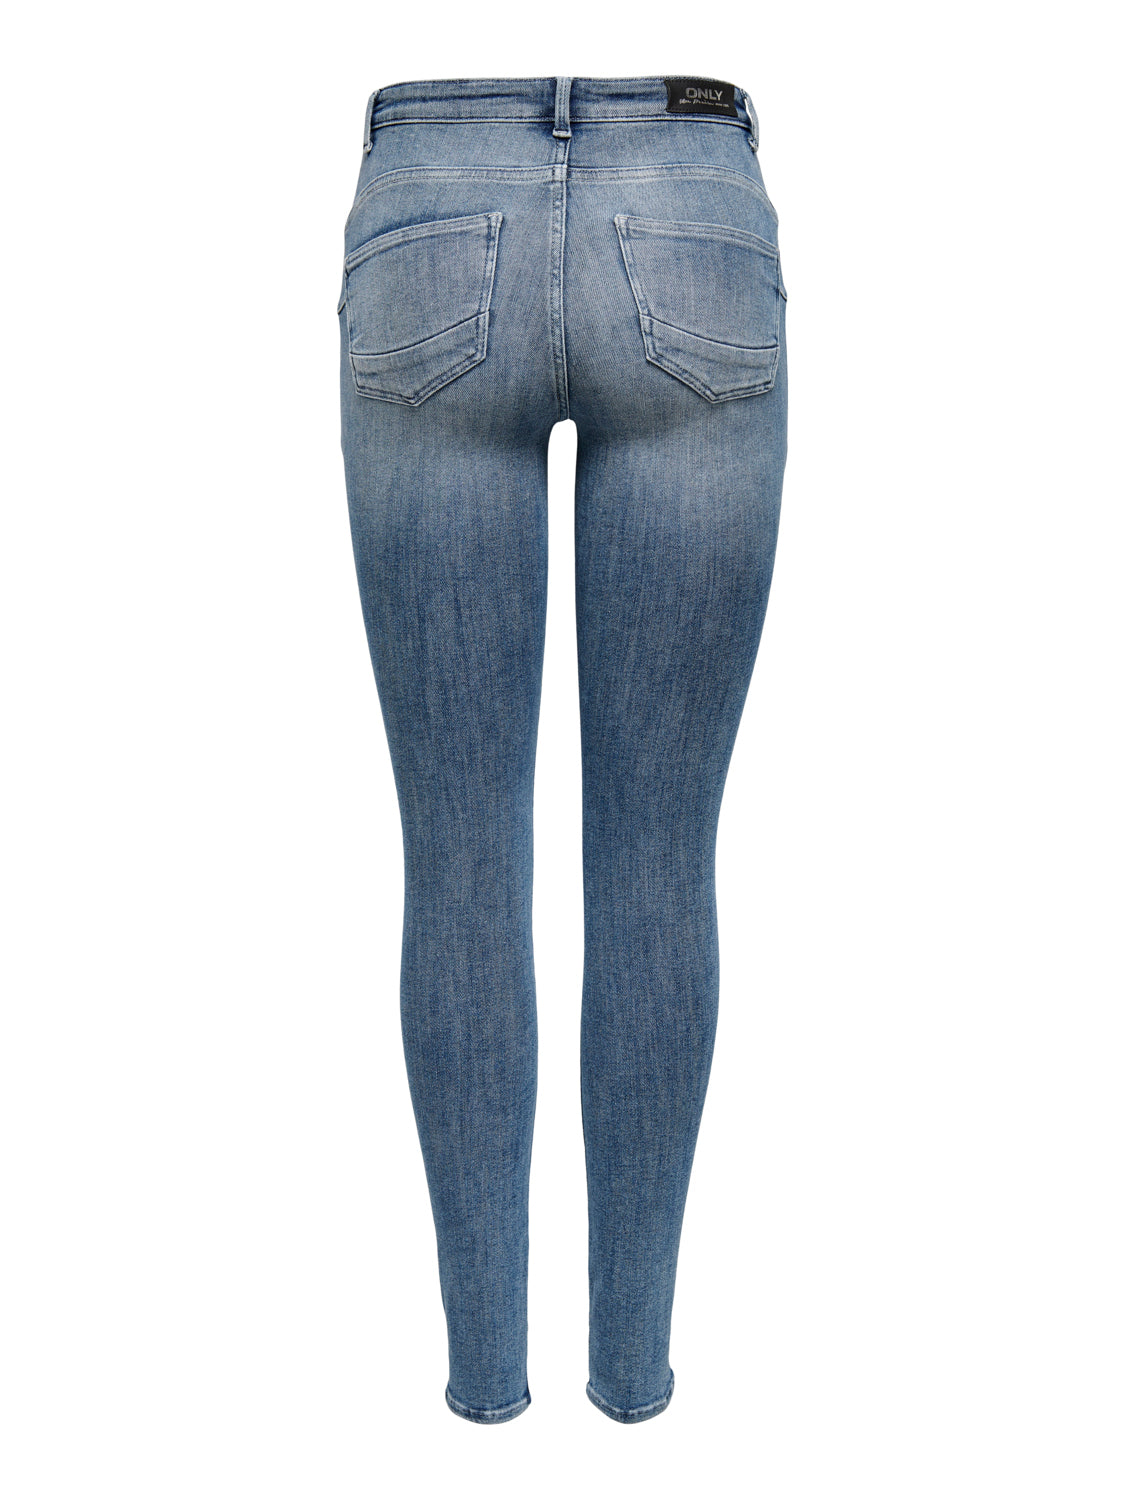 ONLPOWER Jeans - Medium Blue Denim